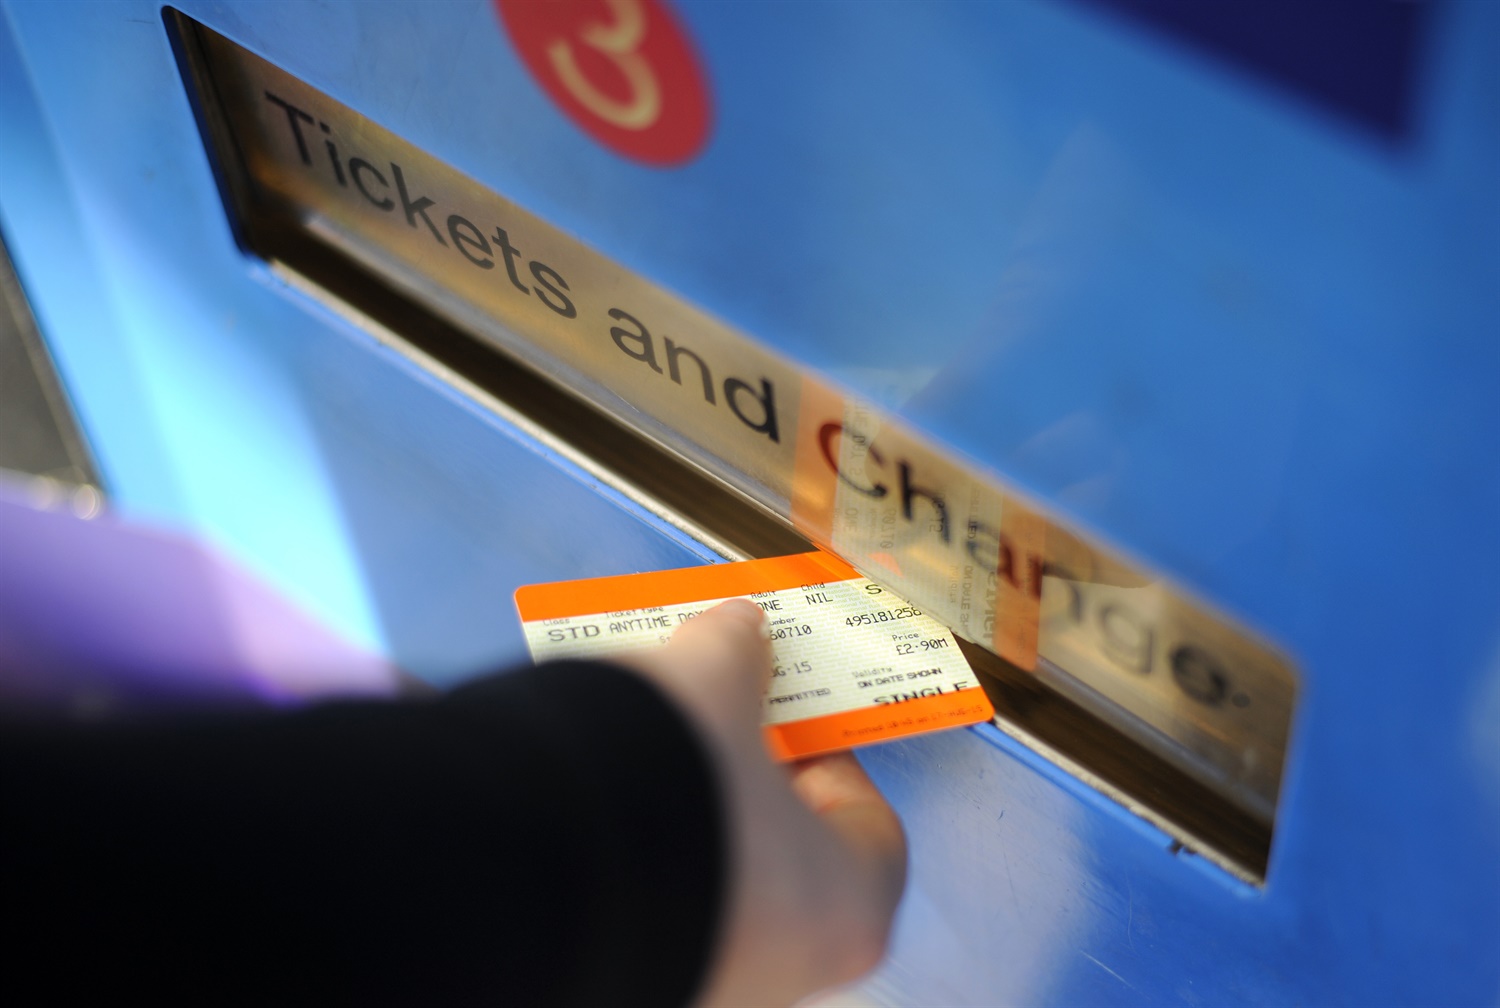 Improvements to ticketing system much needed – Maynard